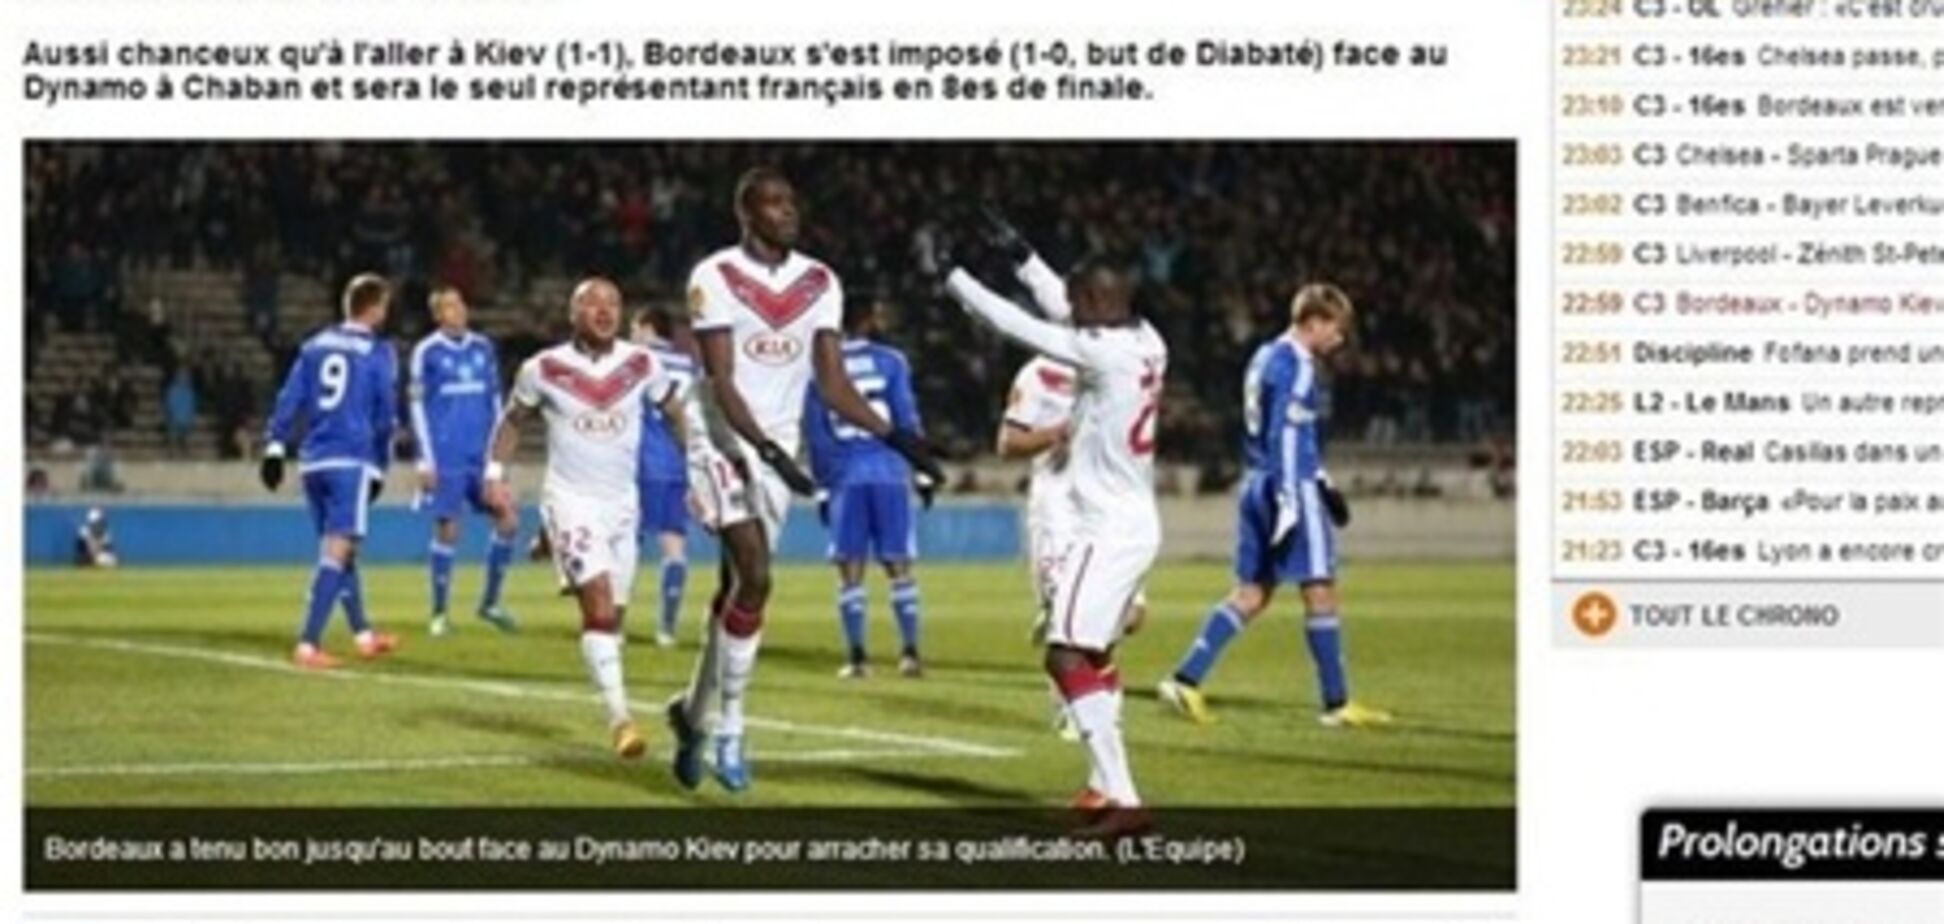 Французская пресса о матче 'Бордо' - 'Динамо'